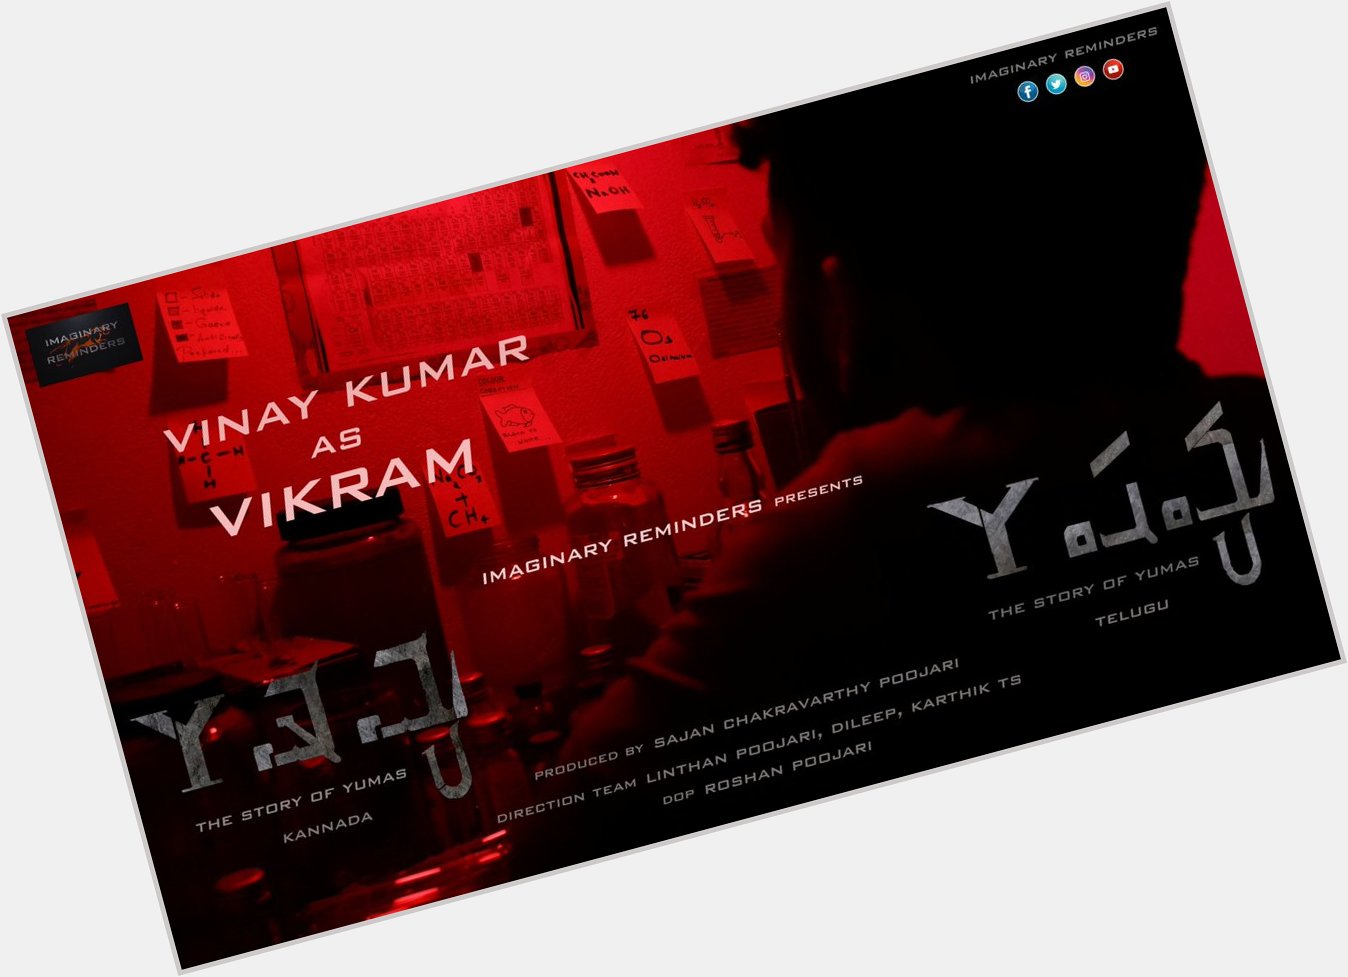 Vinay kumar as vikram. Happy birthday Vinay anna. Thank you for being a part of Y-shamya.  